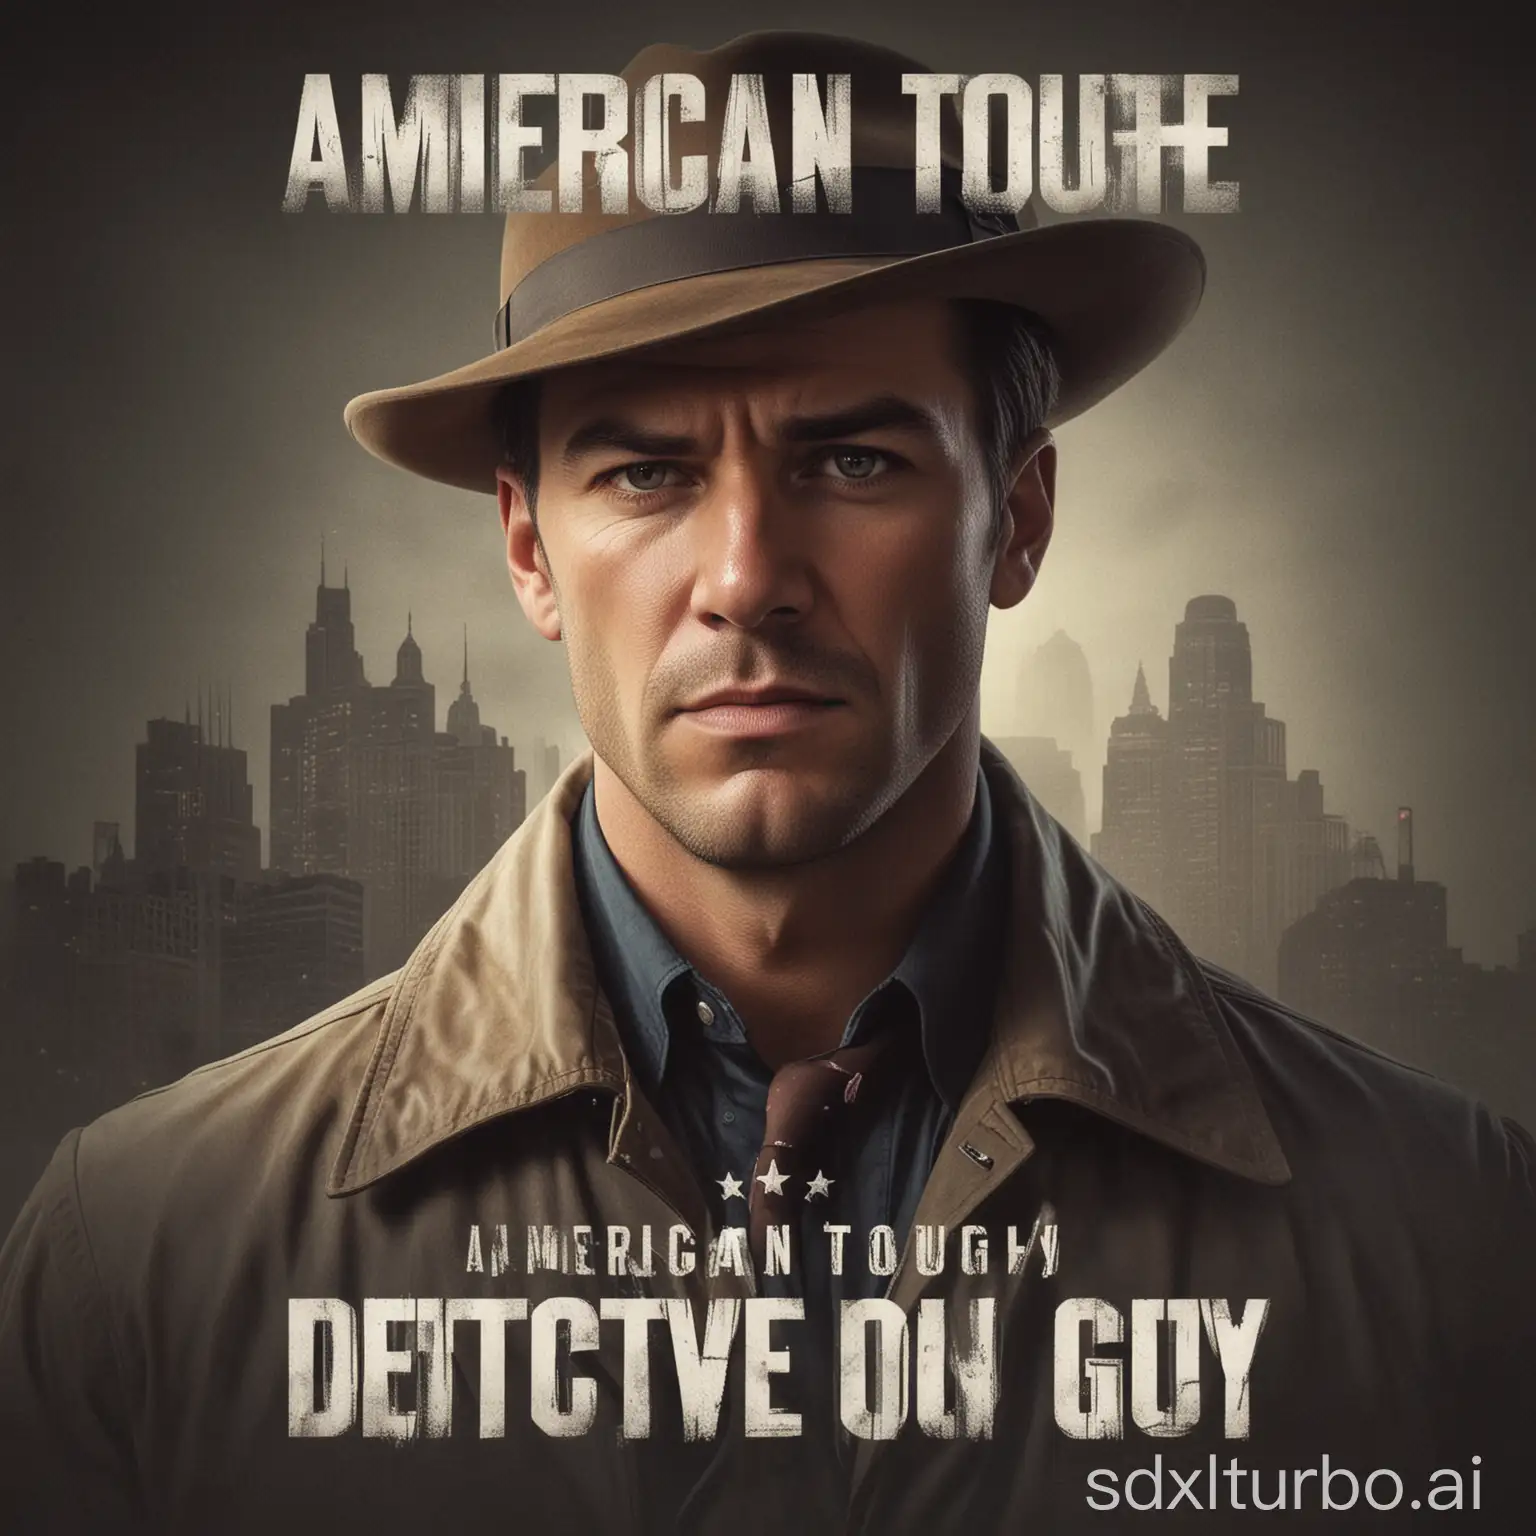 American tough guy detective